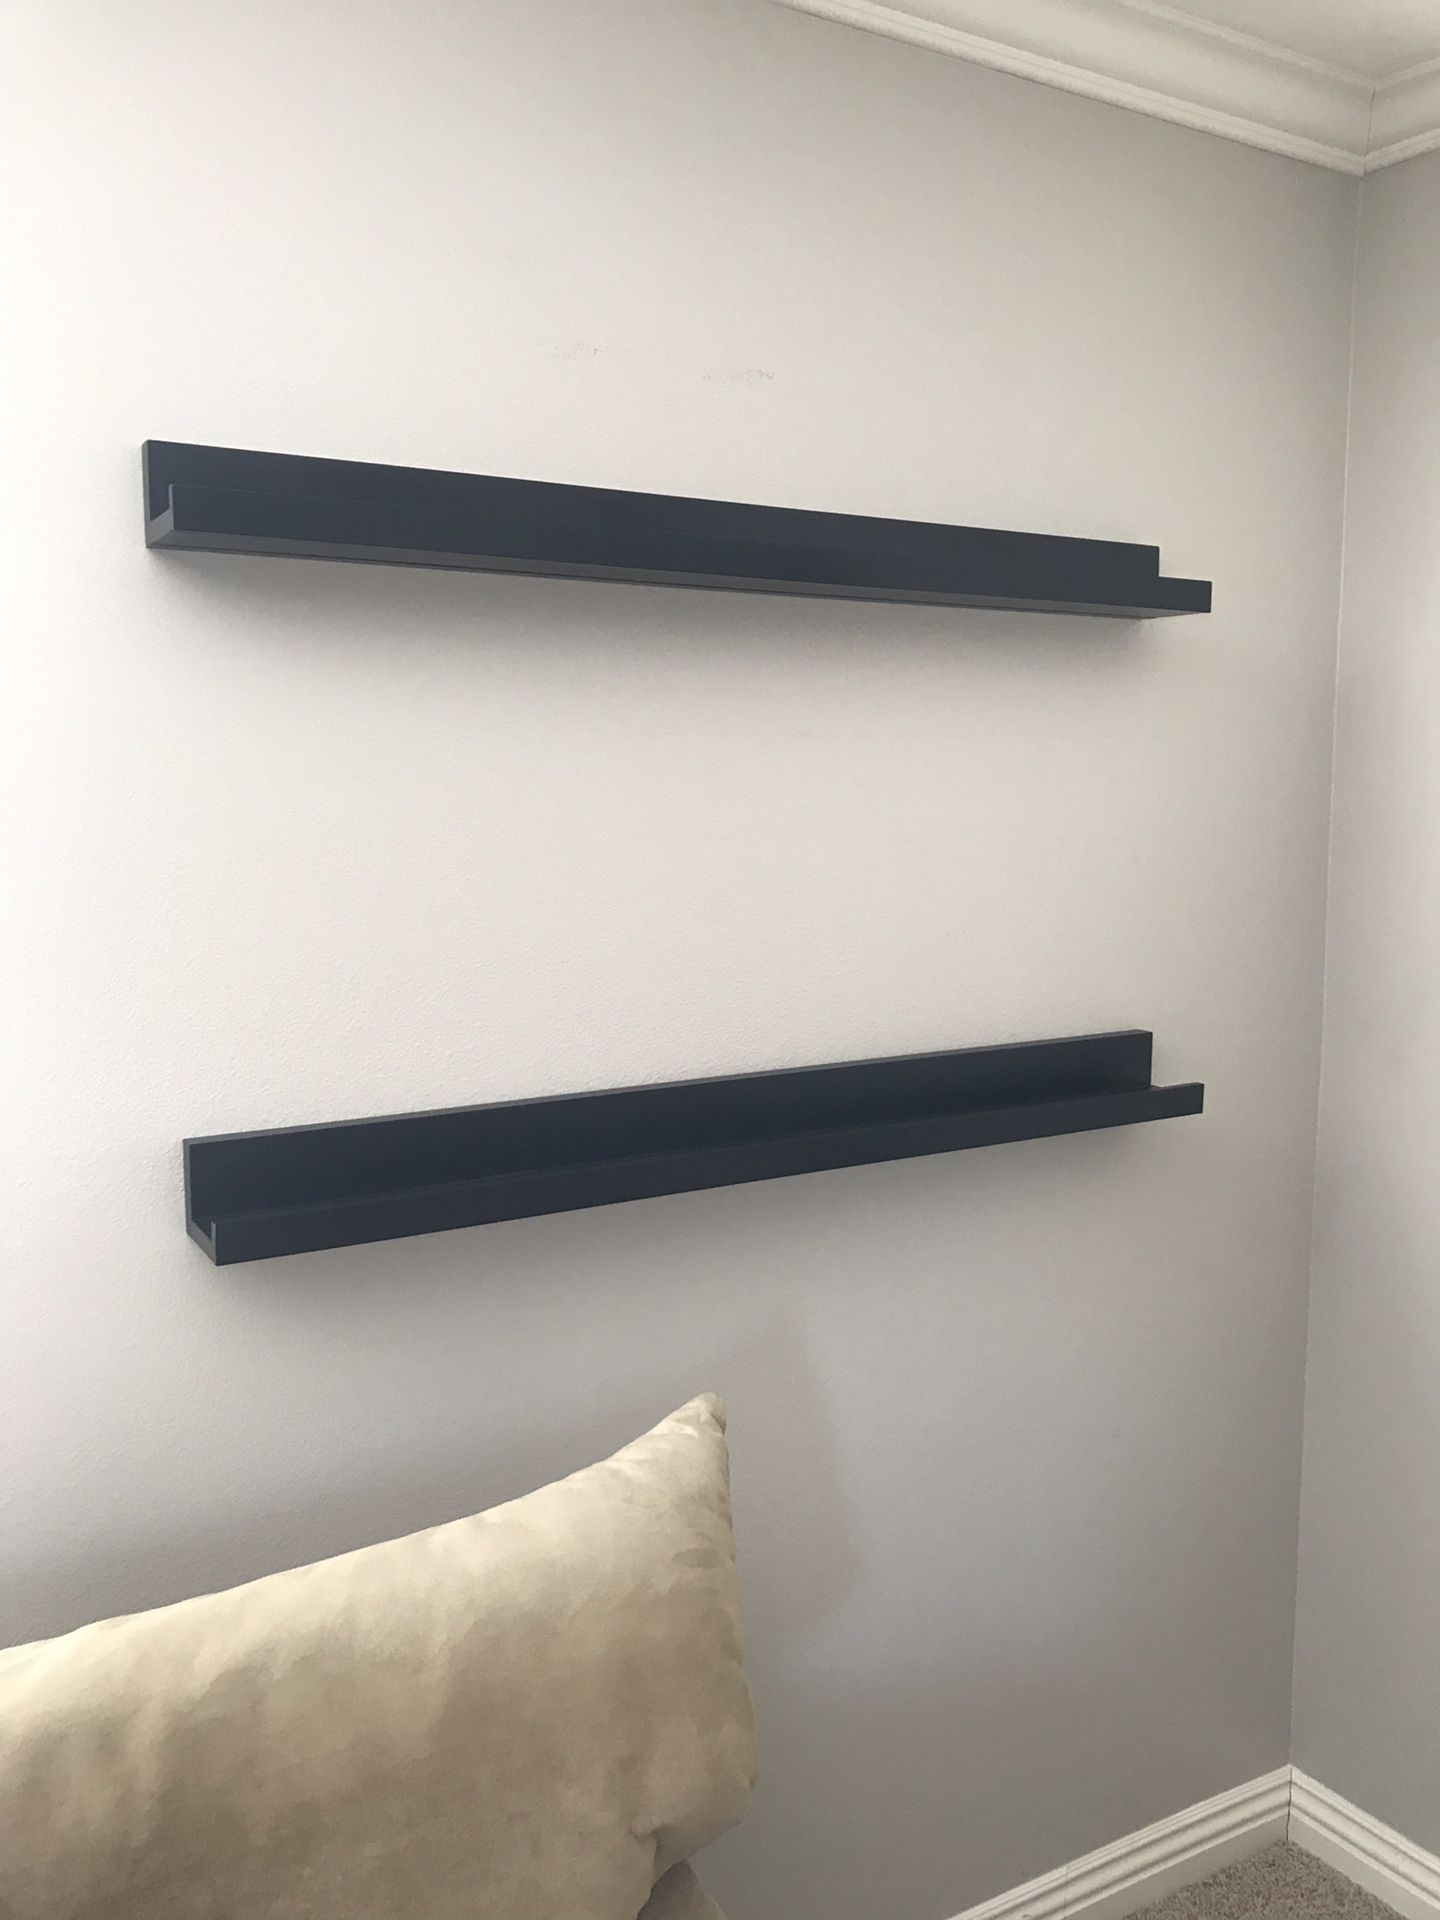 4 foot long black floating shelves / ledges